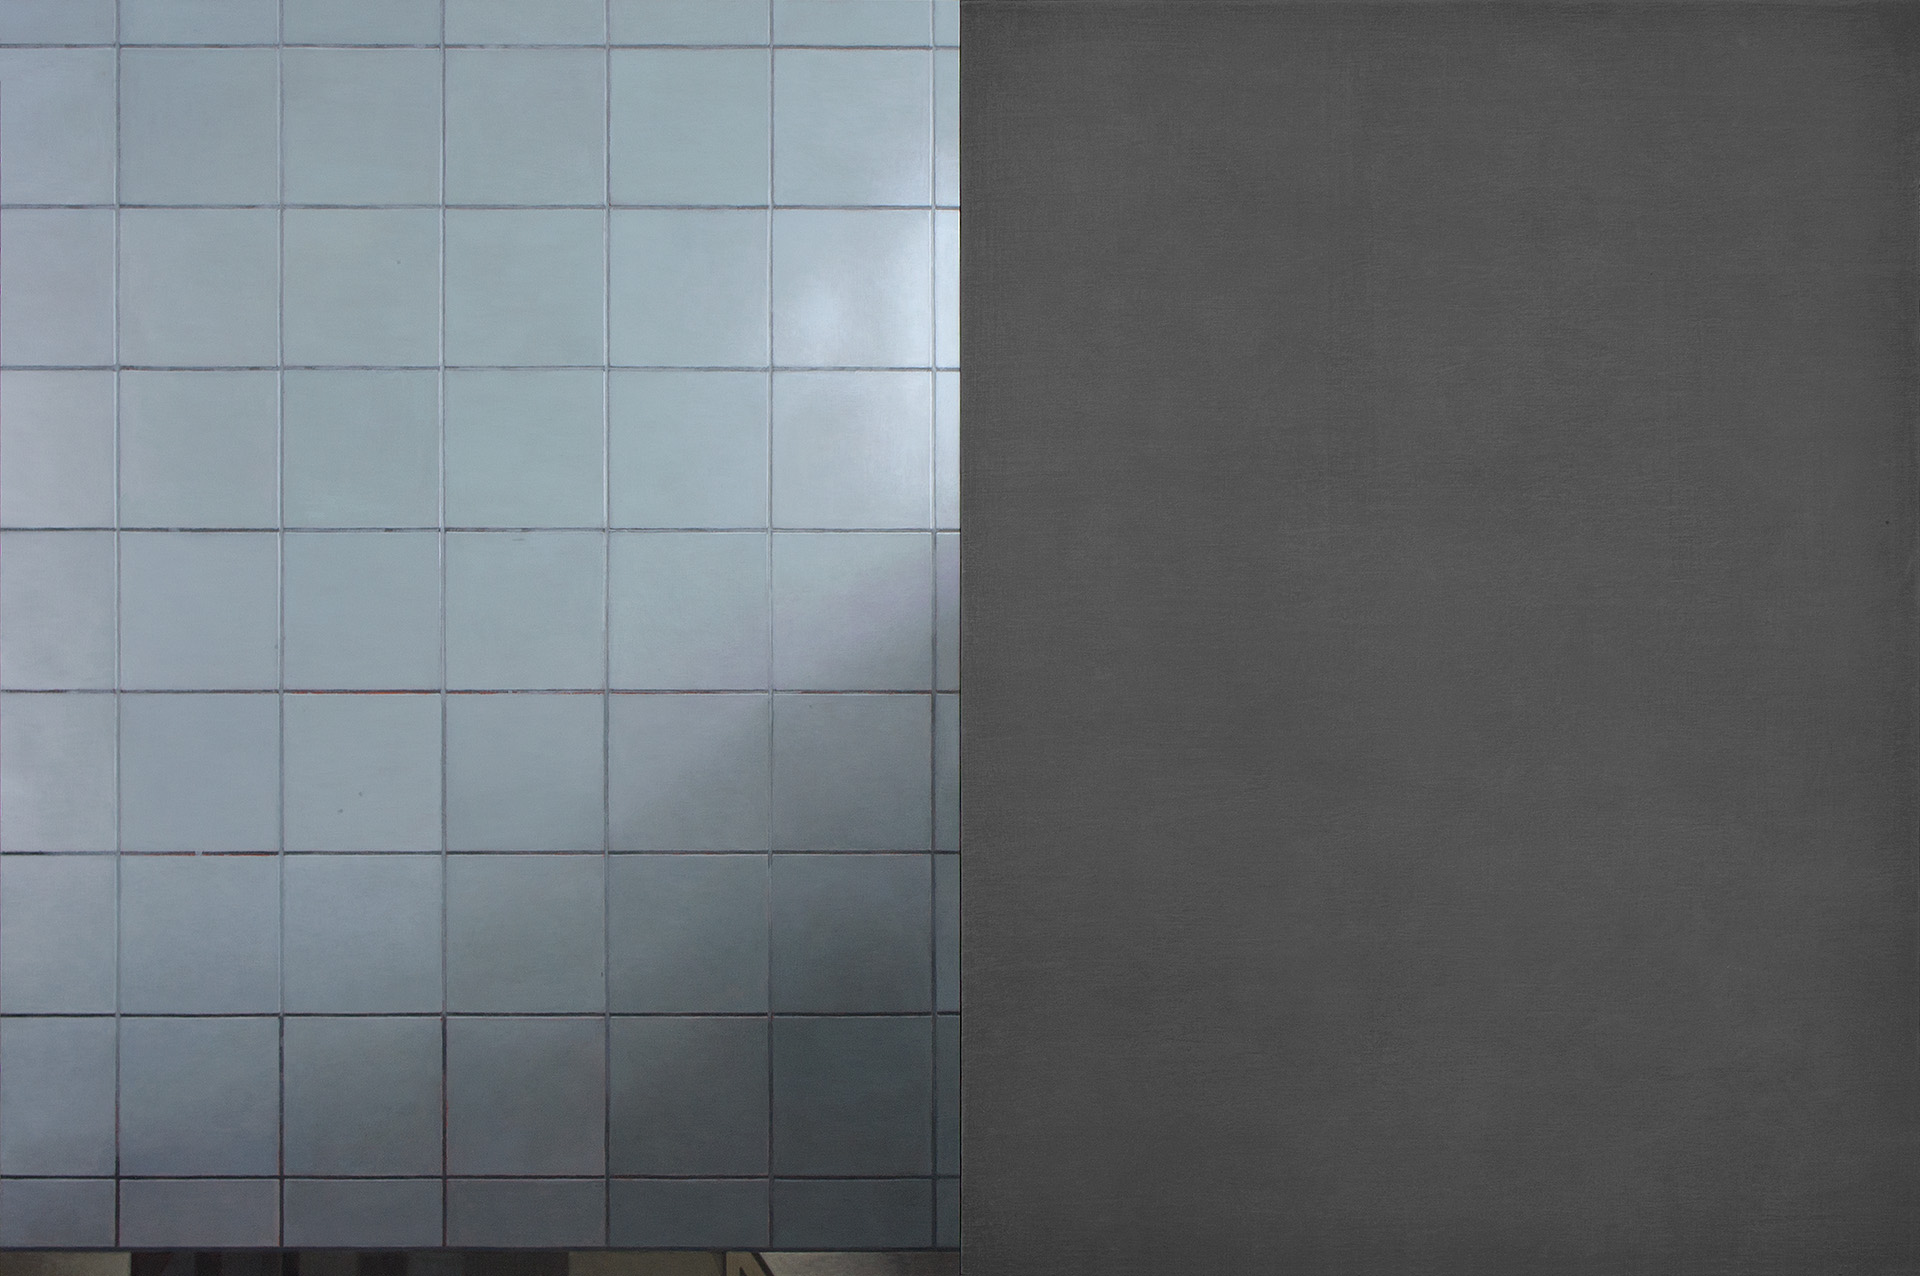  Tiles, Graphite, 2018, acrylic on aluminium composite panel (two panels), 695 x 1040mm 